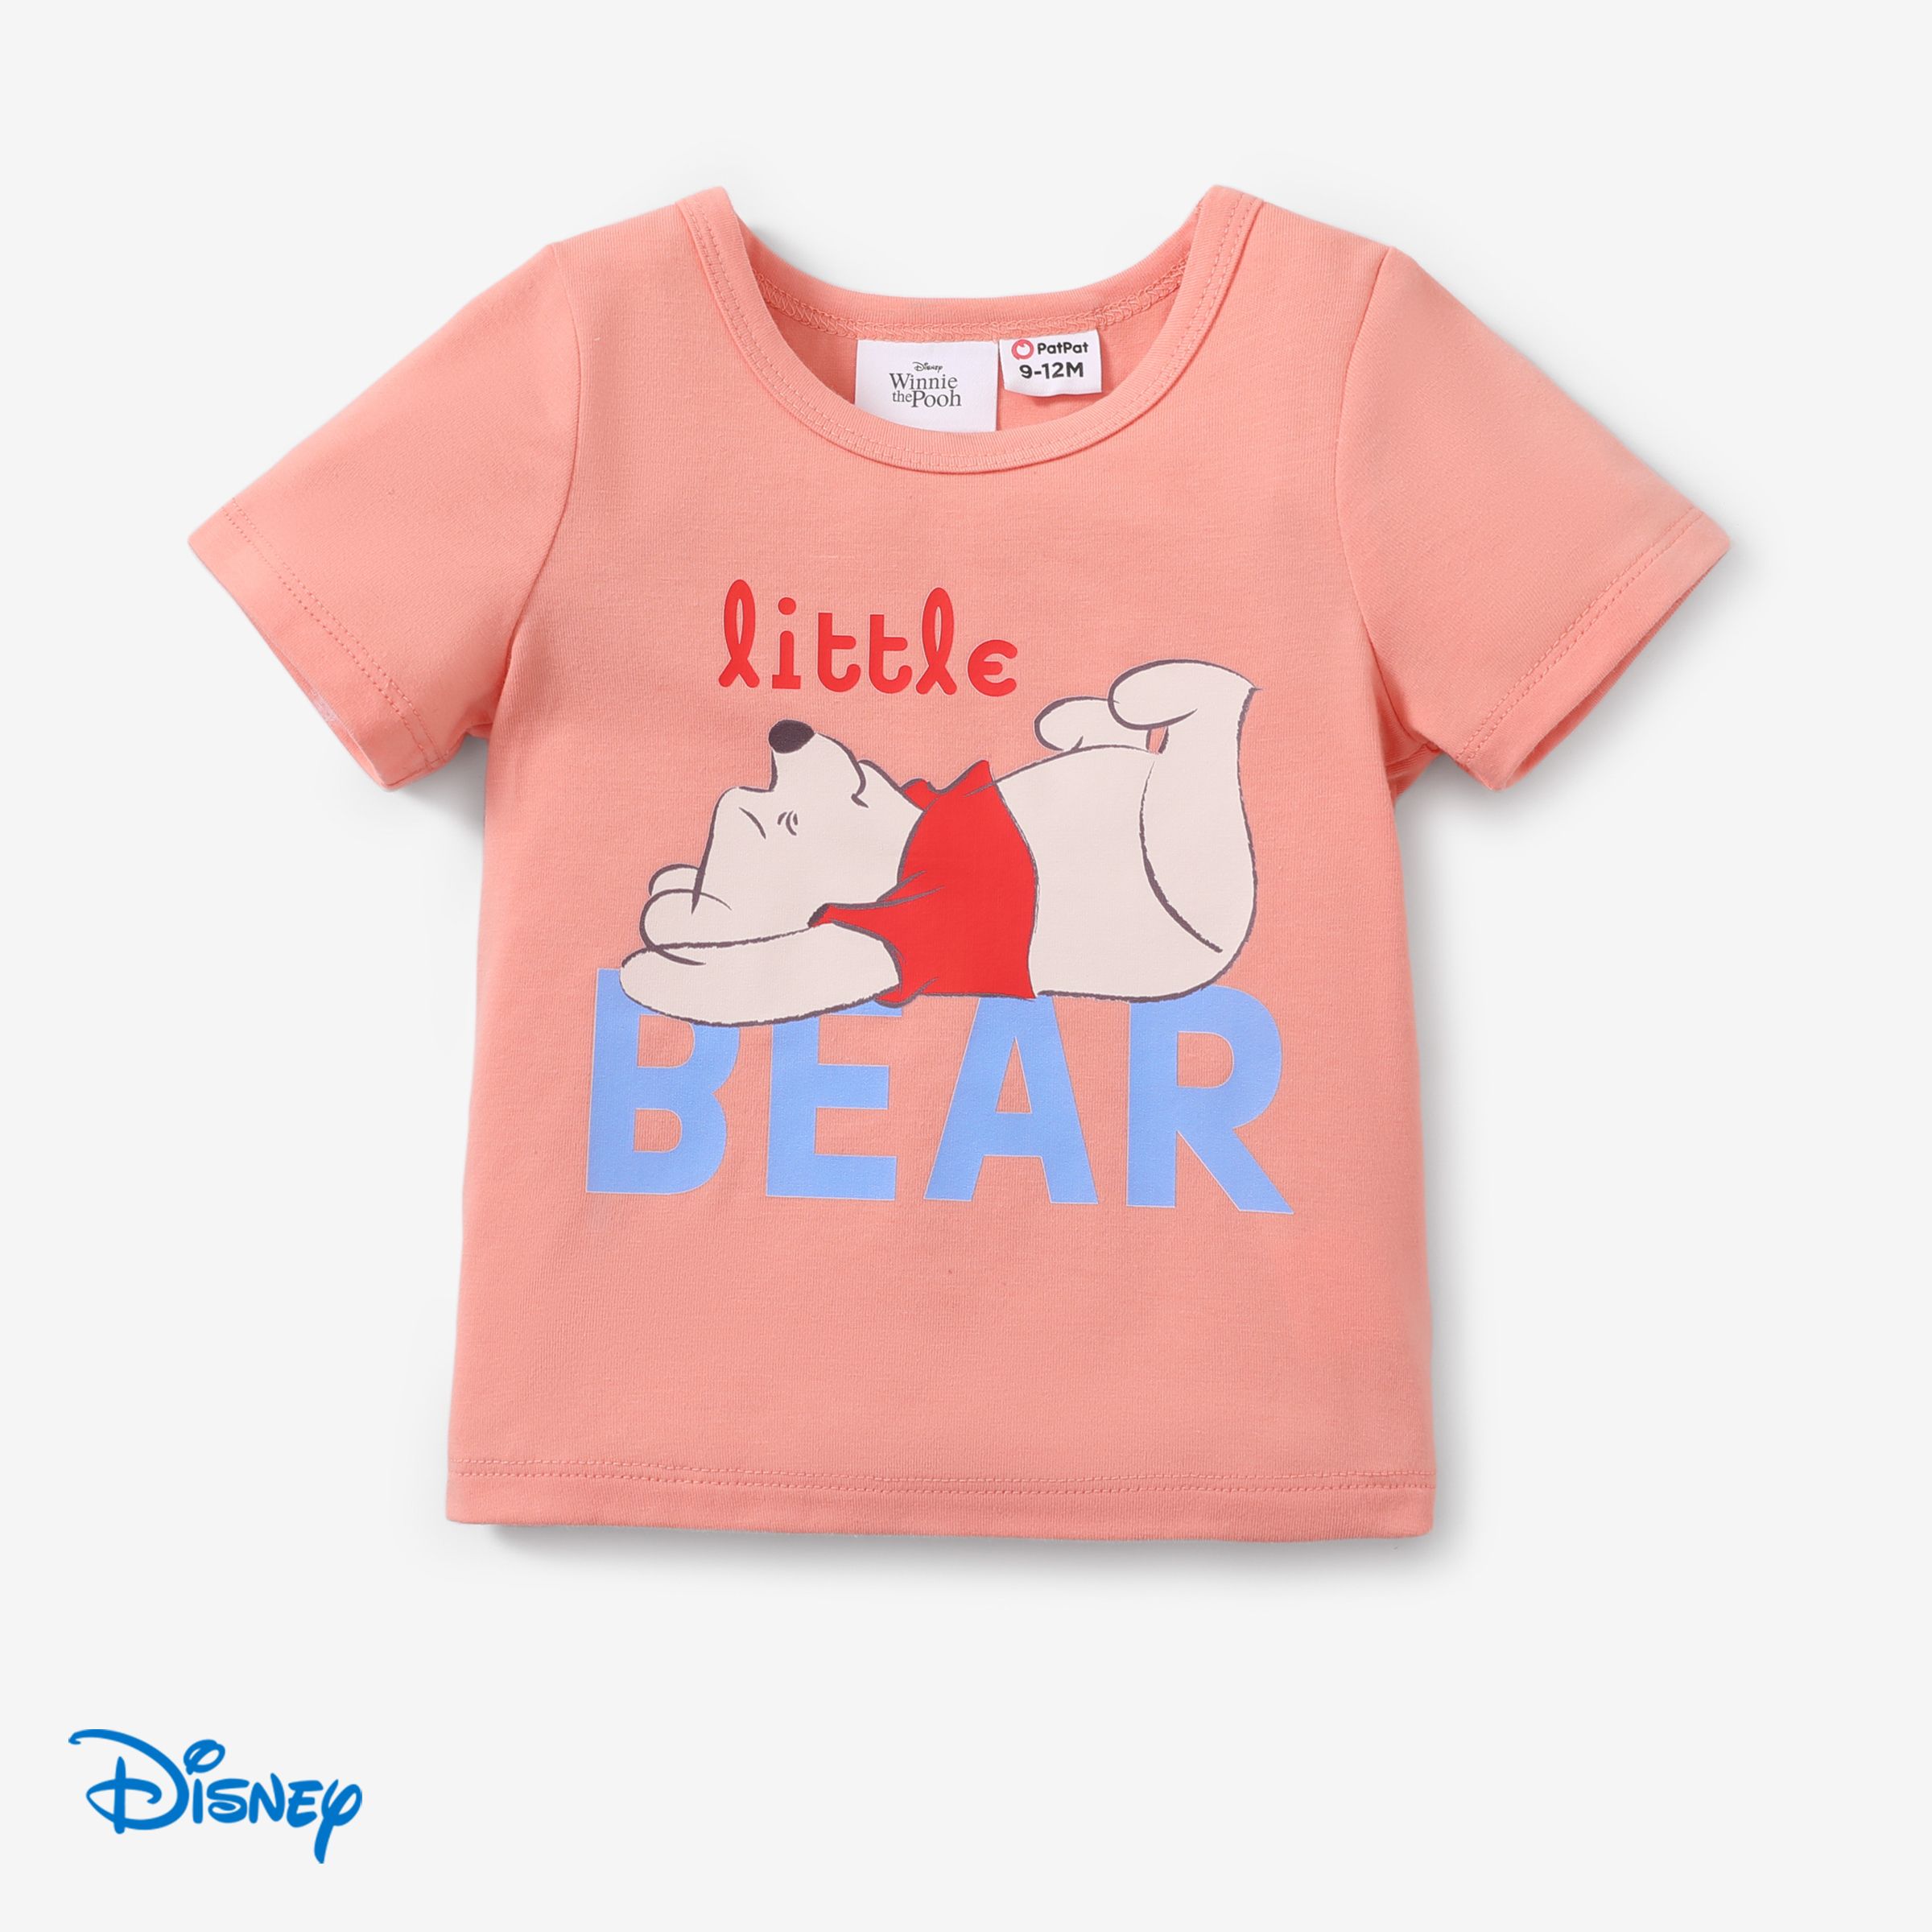 Disney Winnie The Pooh 1pc Baby Boy/Baby Girl T-shirt Or Checkerboard Bib Pants